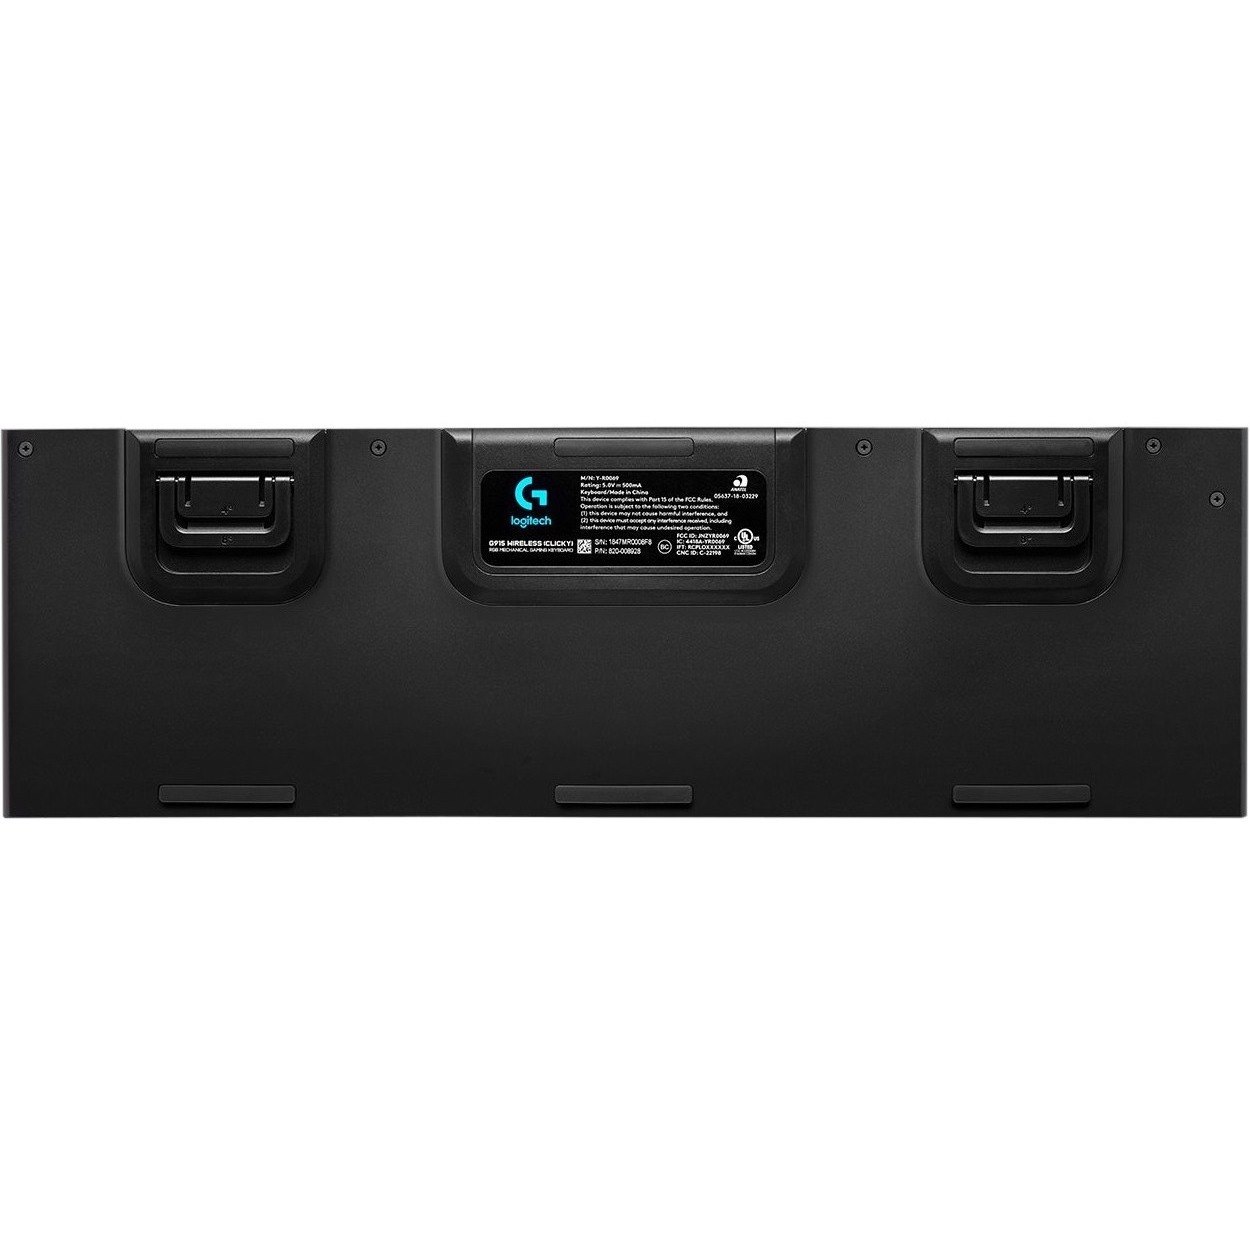 Logitech G915 Gaming Keyboard - Wireless Connectivity - USB Interface - English - Carbon